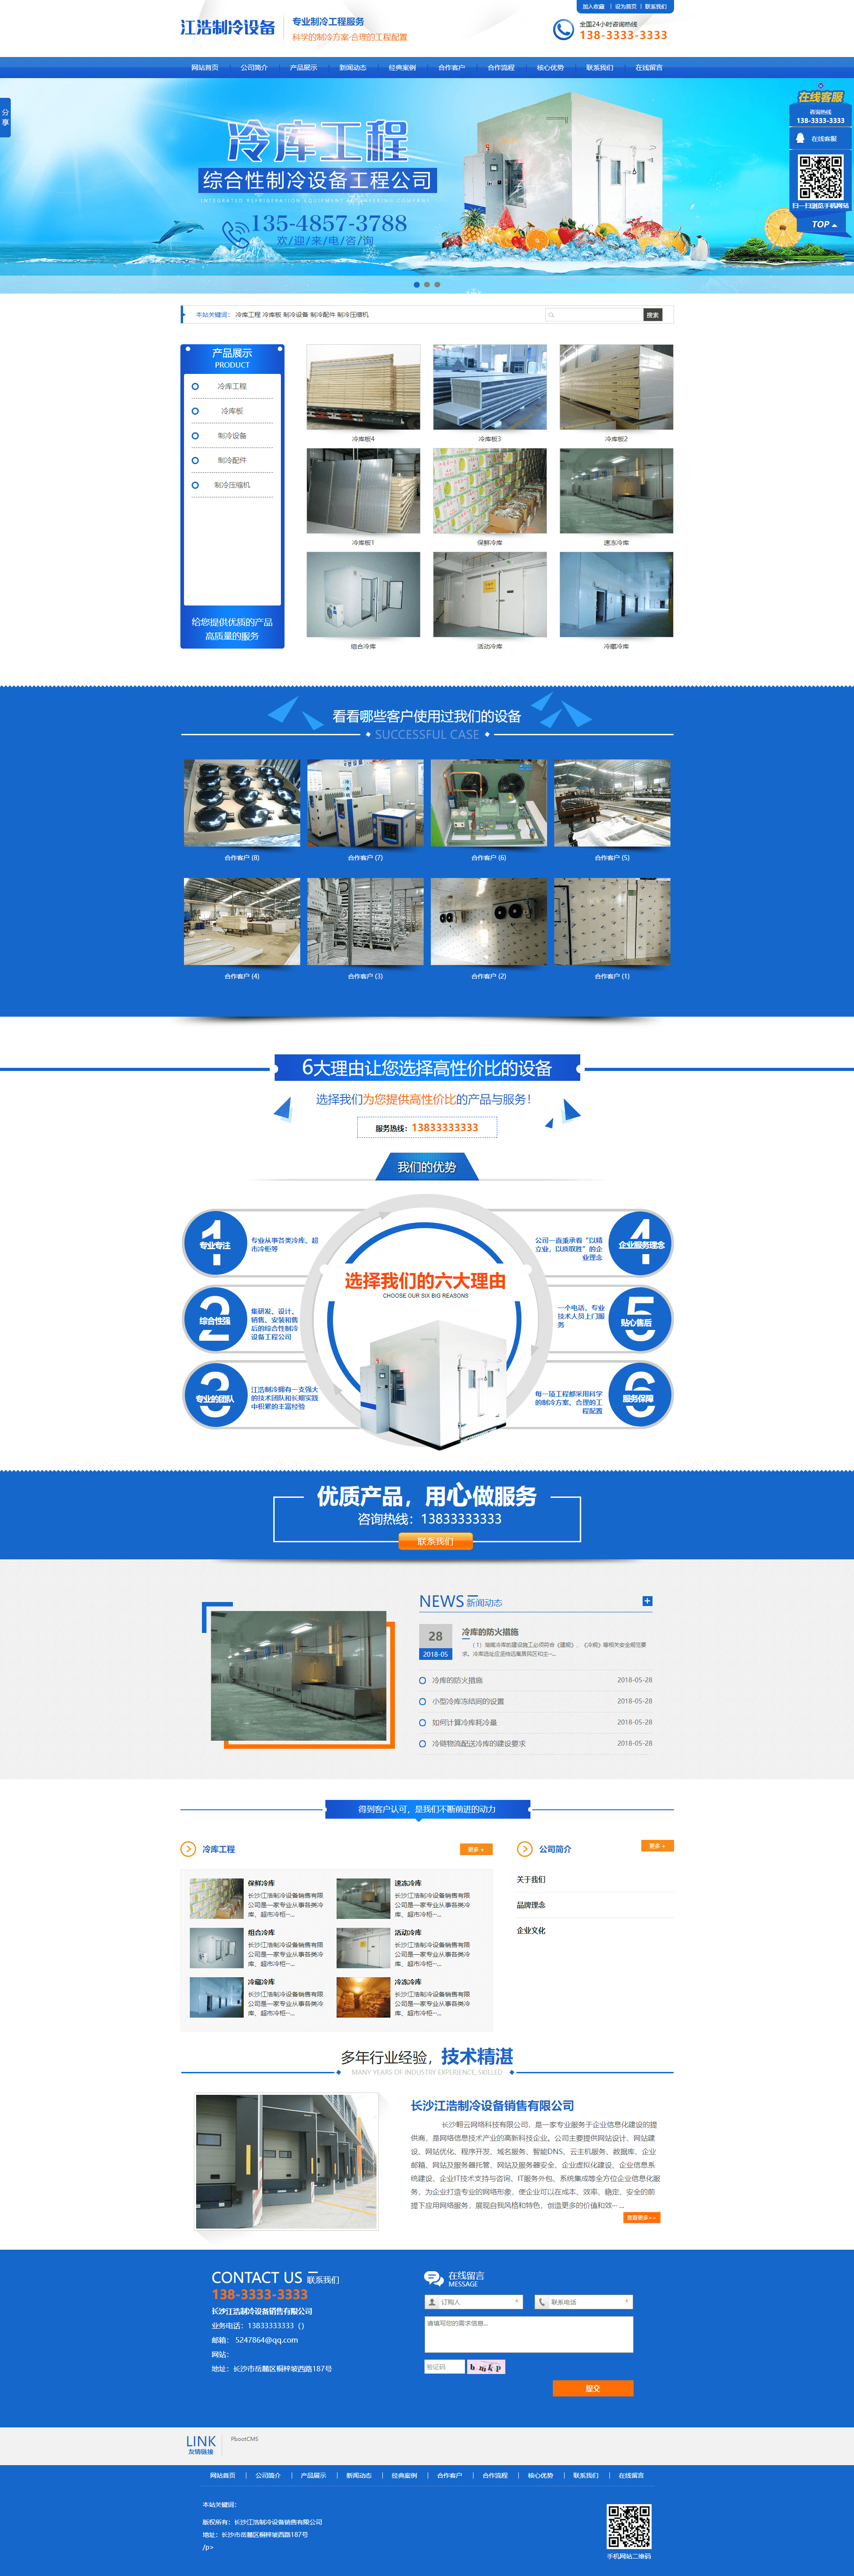 Pbootcms制冷设备空调网站模板